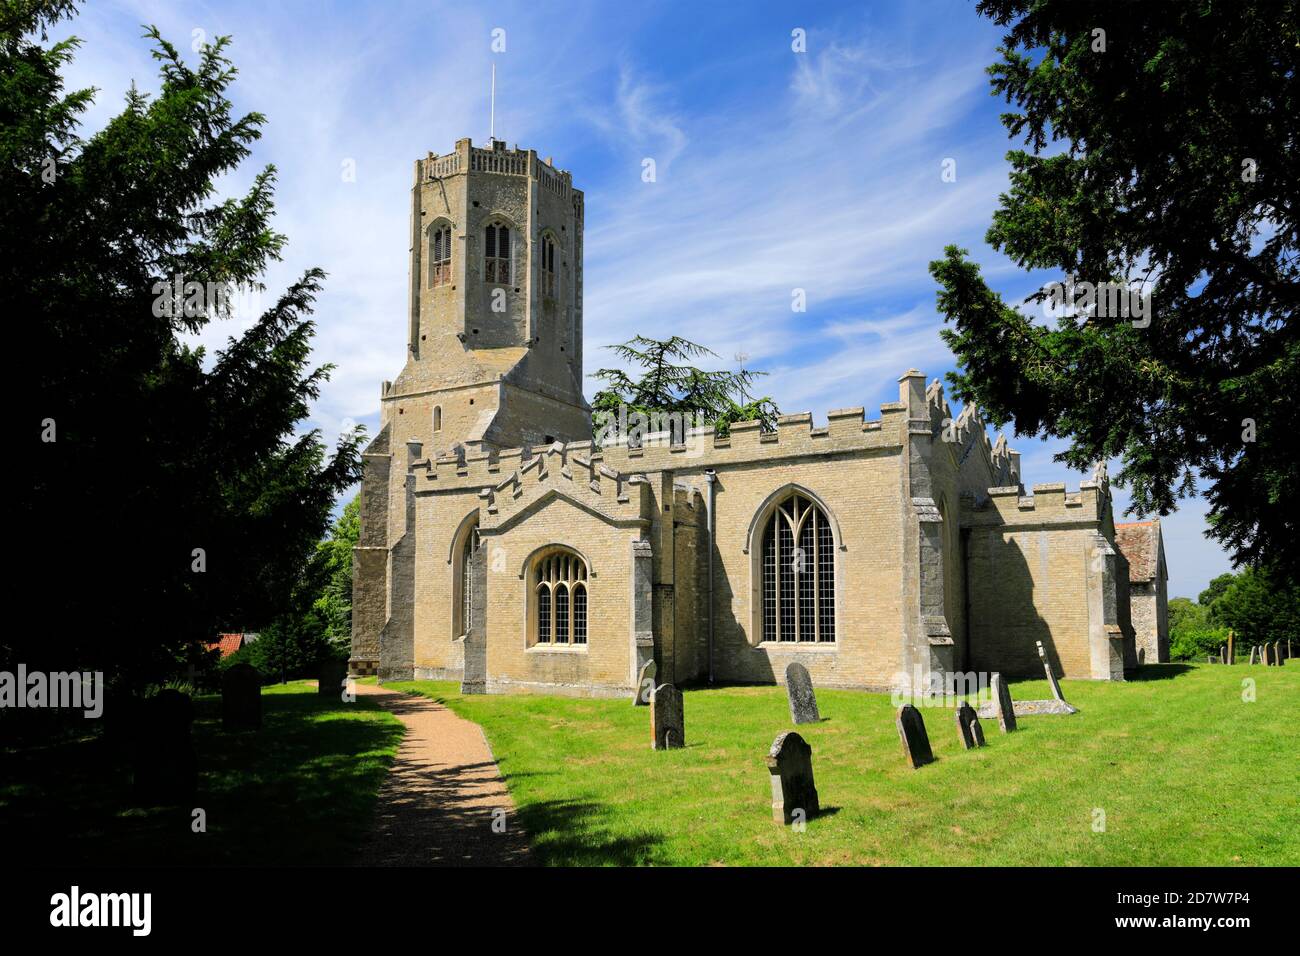 The Swaffham Priory, St Cyriac & St Julitta church, Swaffham village, Cambridgeshire; England, UK Stock Photo